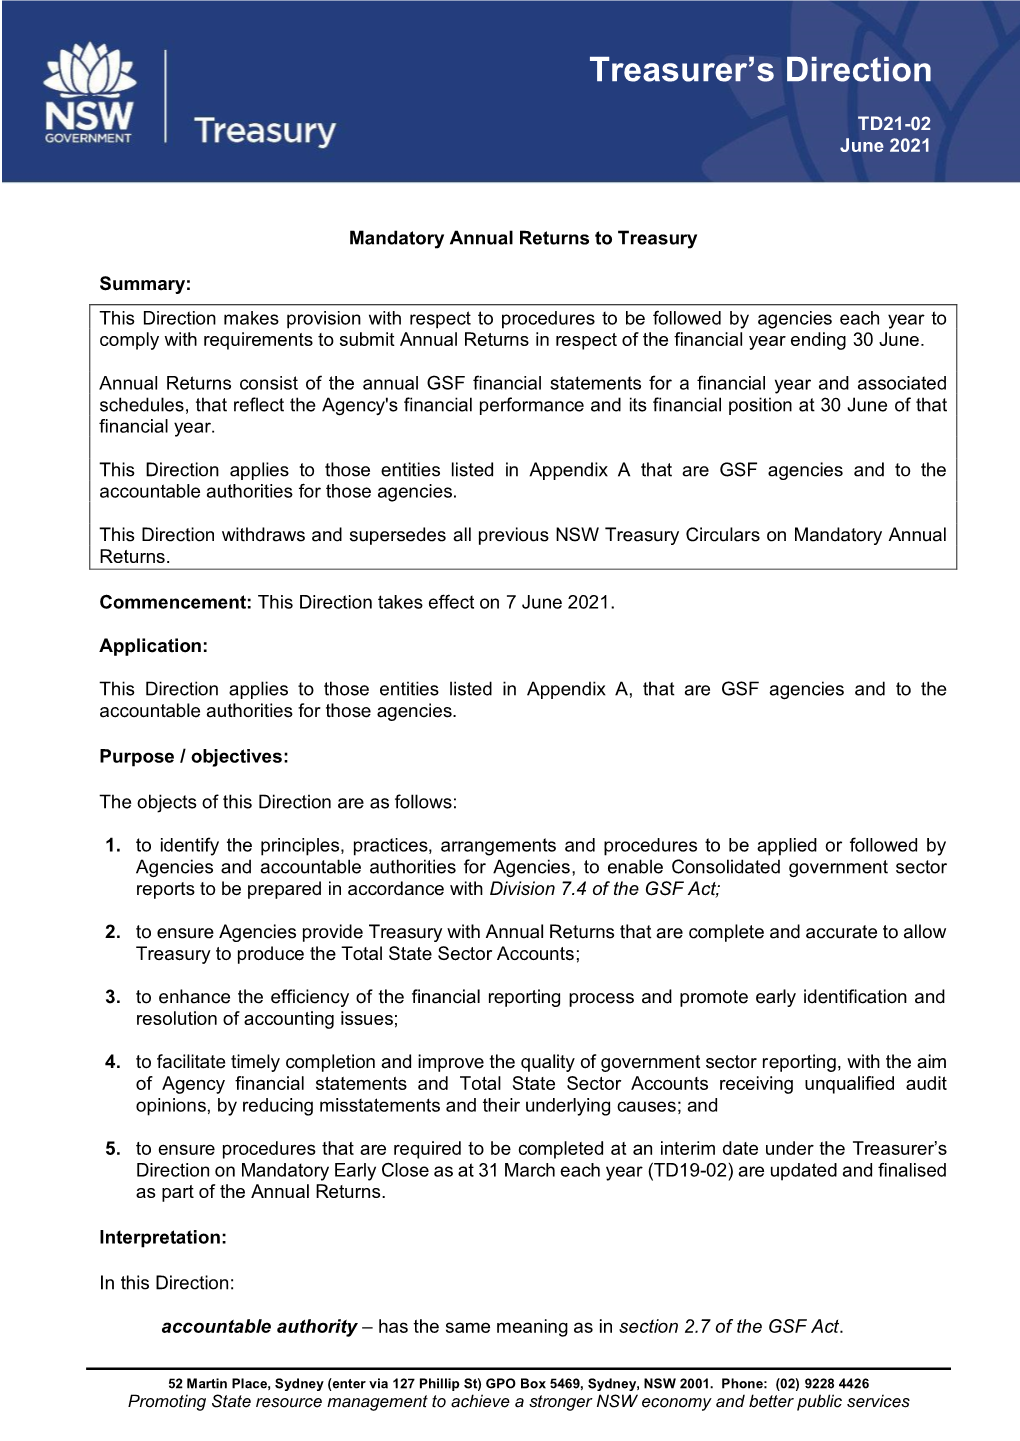 TD21-02 Treasurer's Direction for the Mandatory Annual Returns To